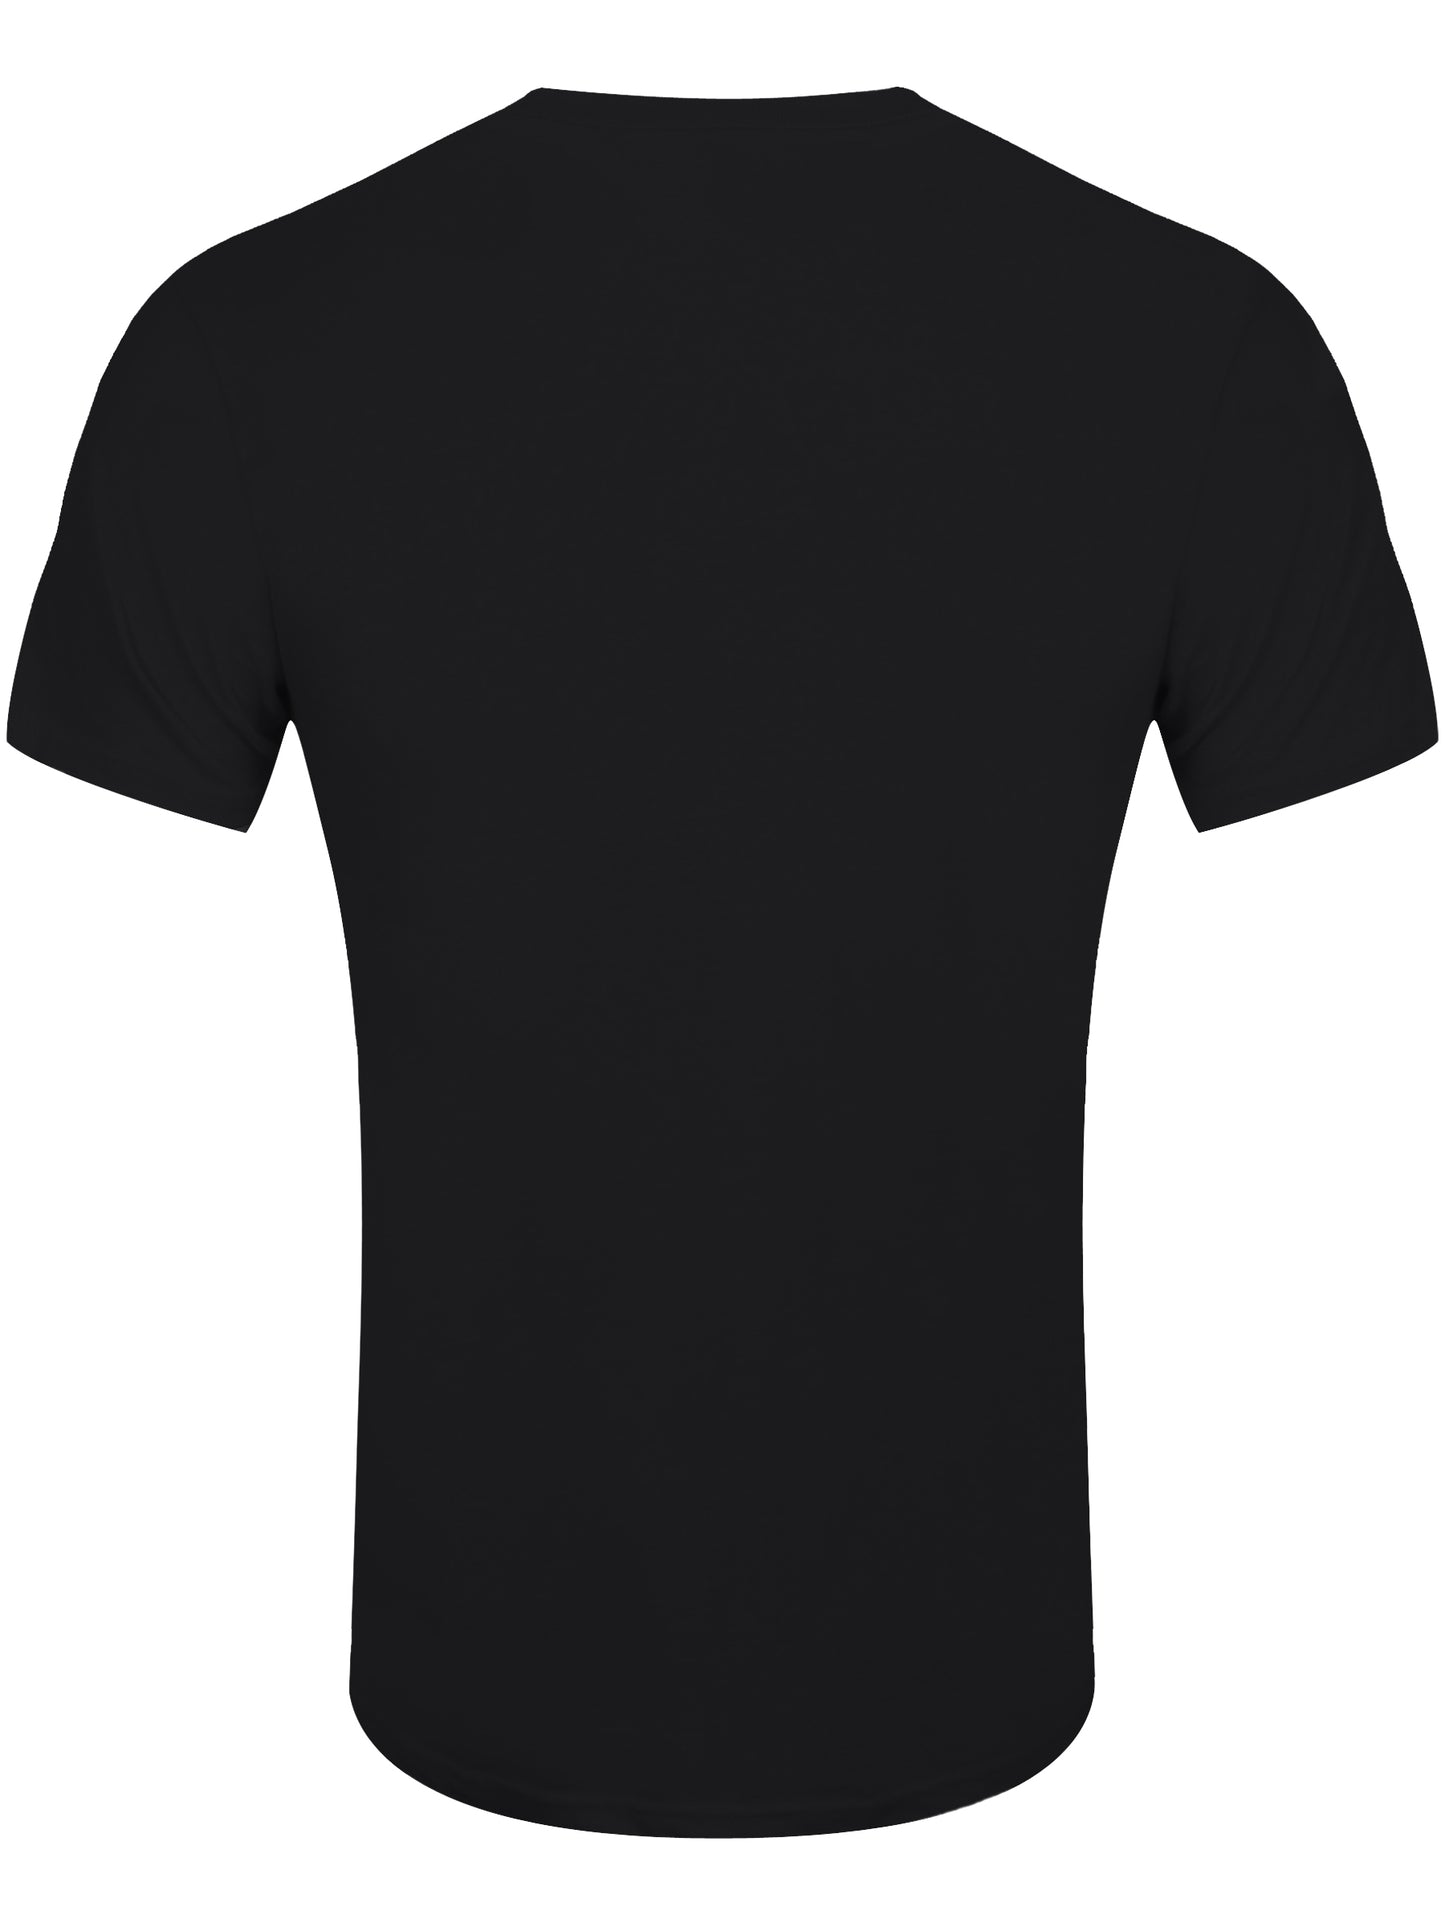 Iron Maiden NOTB Grey Tone Men's Black T-Shirt